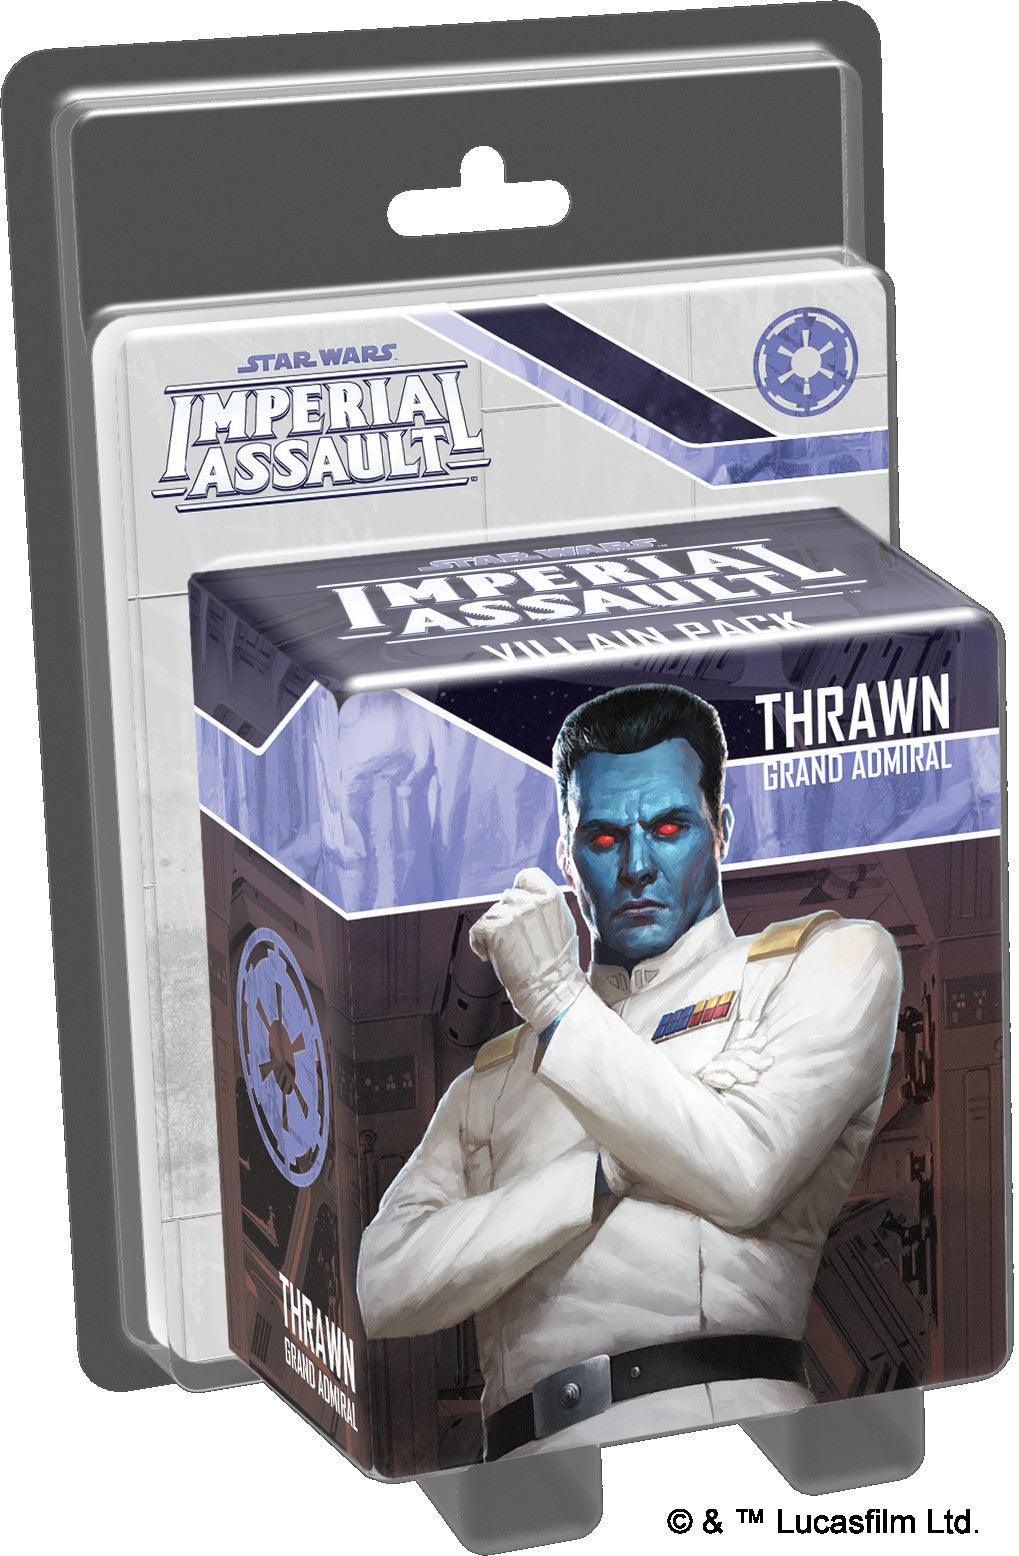 VR-55428 Star Wars Imperial Assault - Thrawn Grand Admiral Villain Pack - Fantasy Flight Games - Titan Pop Culture